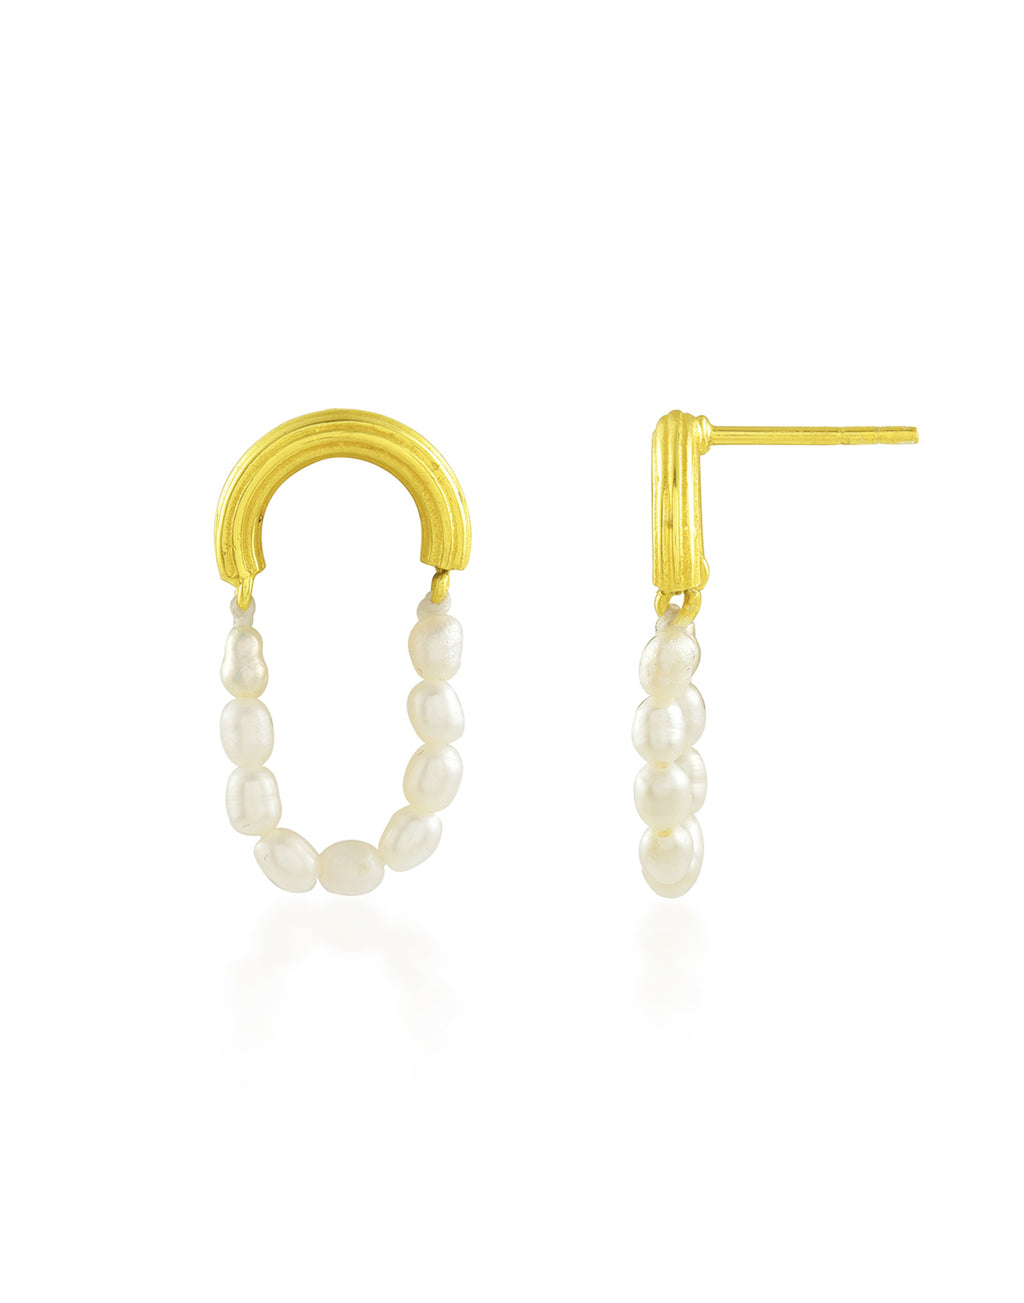 Pearl Beaded Earrings - Statement Earrings - Gold-Plated & Hypoallergenic Jewellery - Made in India - Dubai Jewellery - Dori